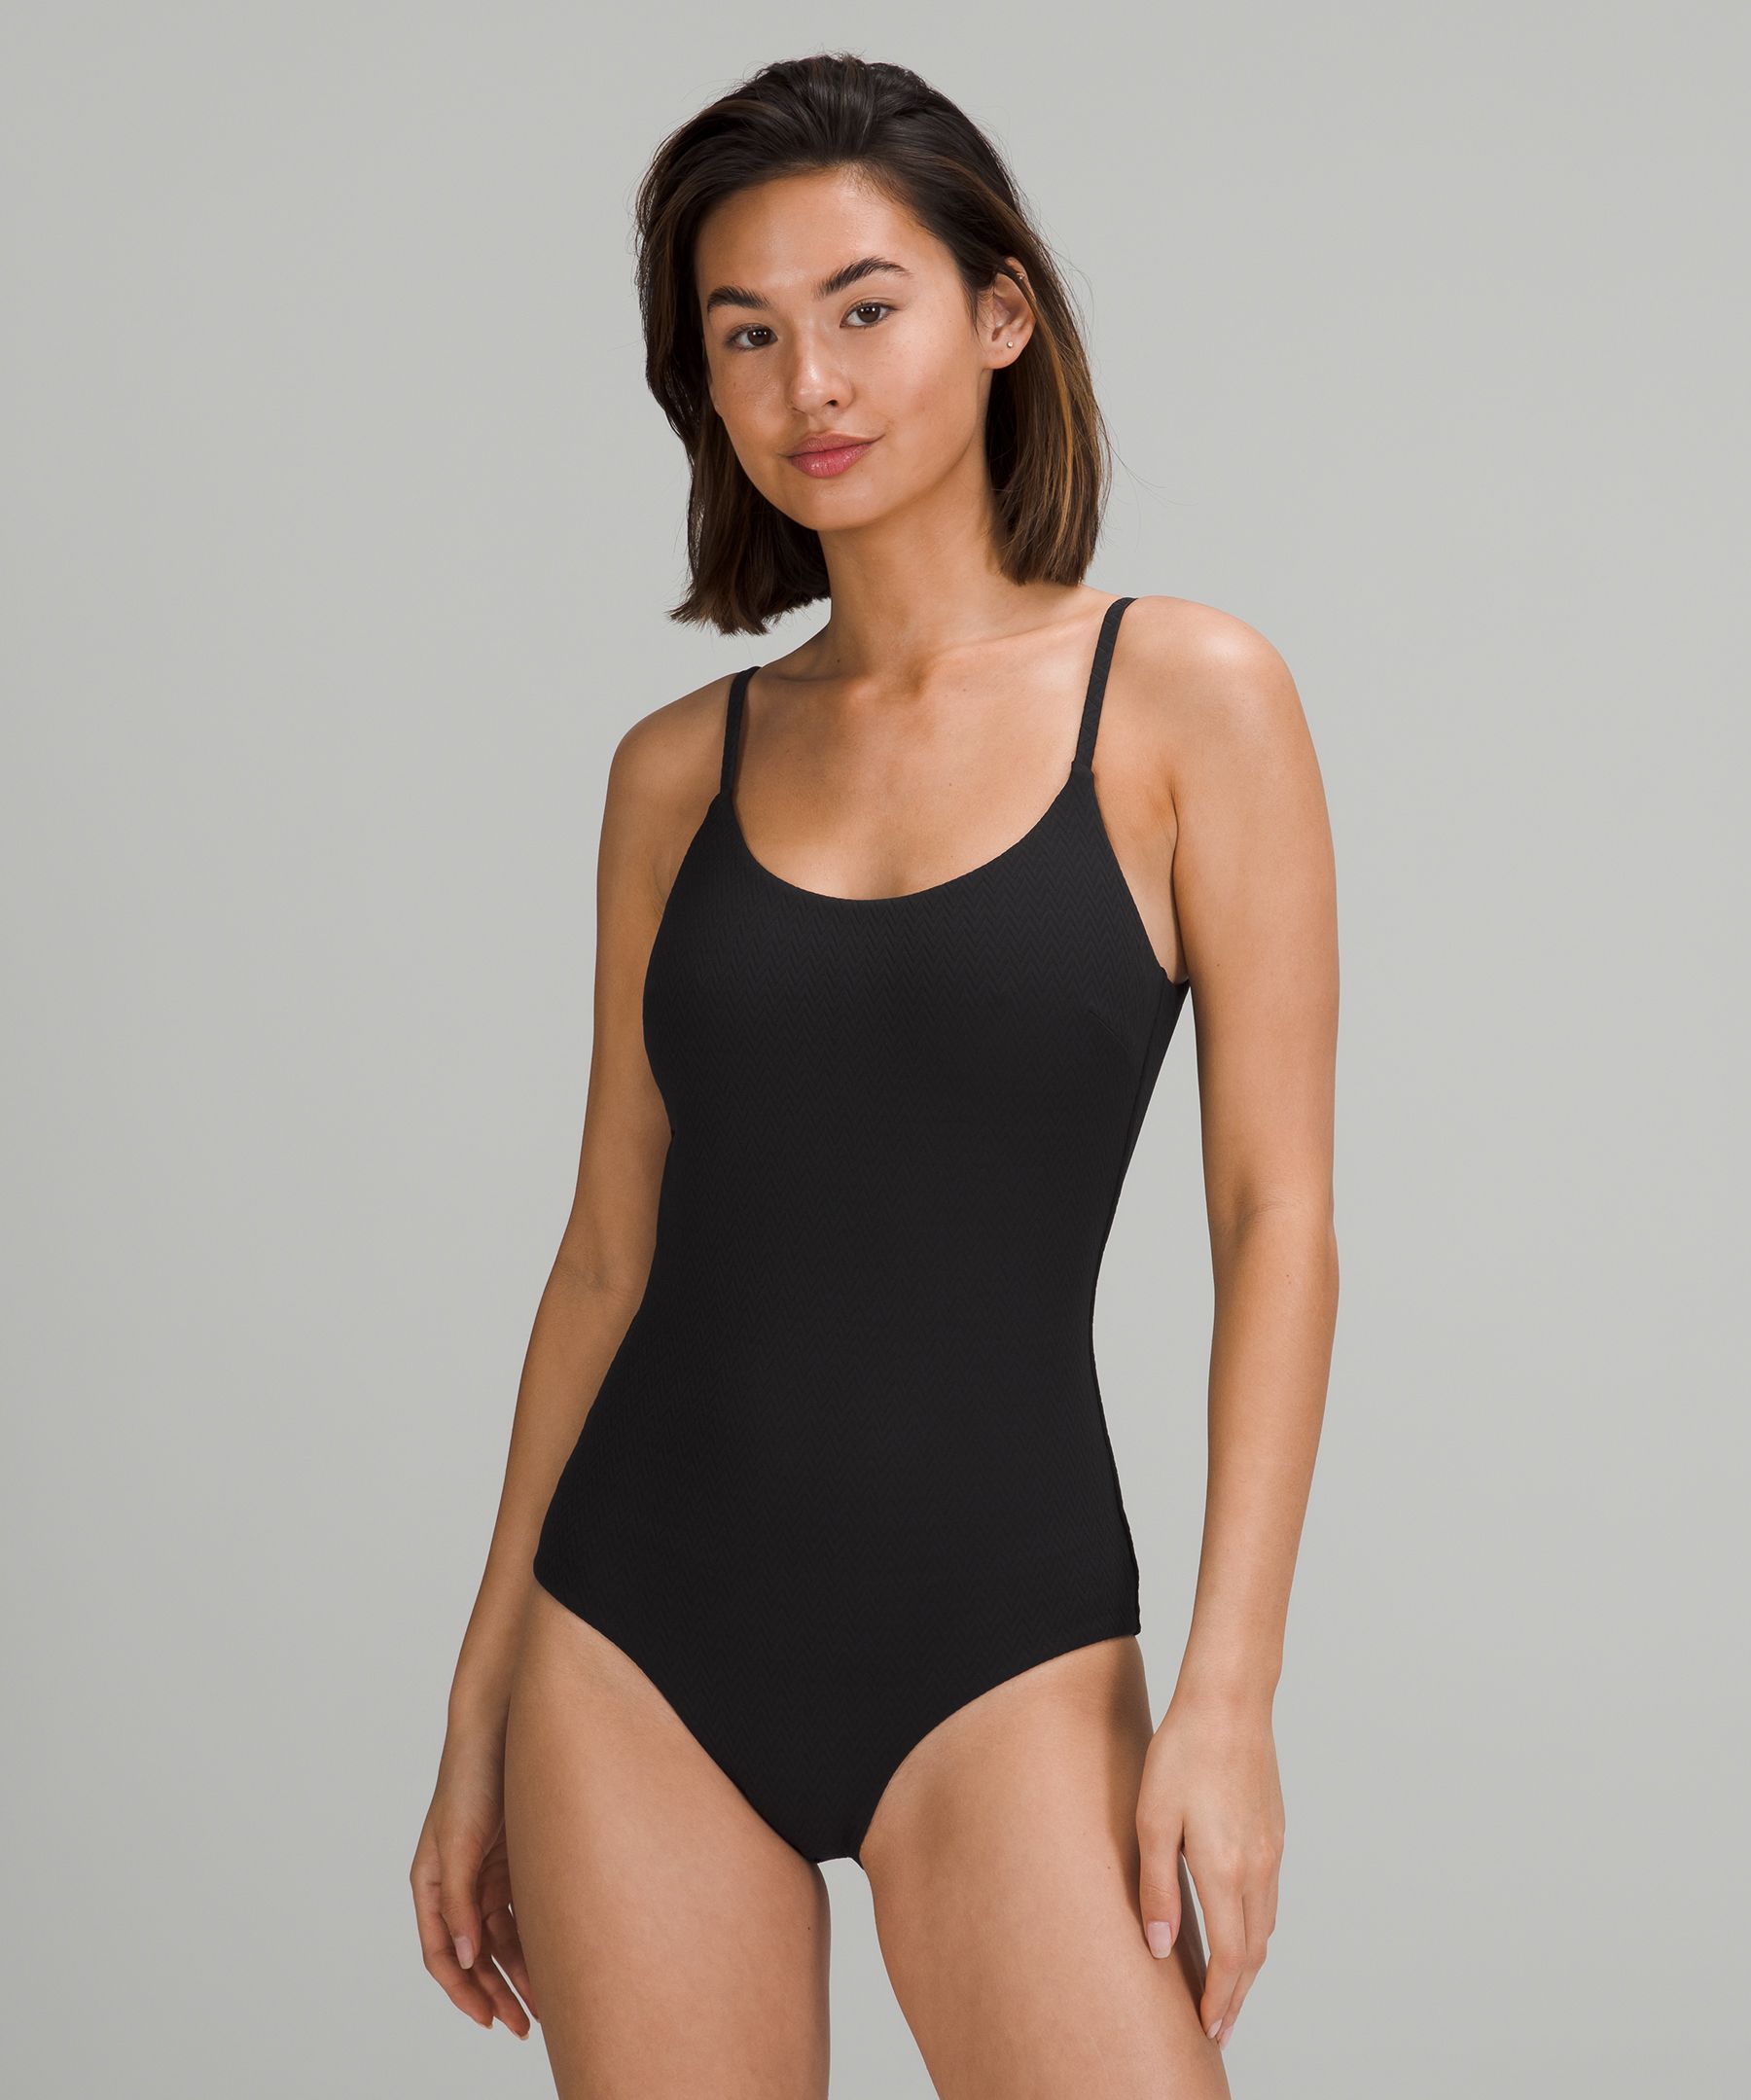 Lululemon Waterside Chevron One-Piece Swimsuit *B/C Cup, Medium